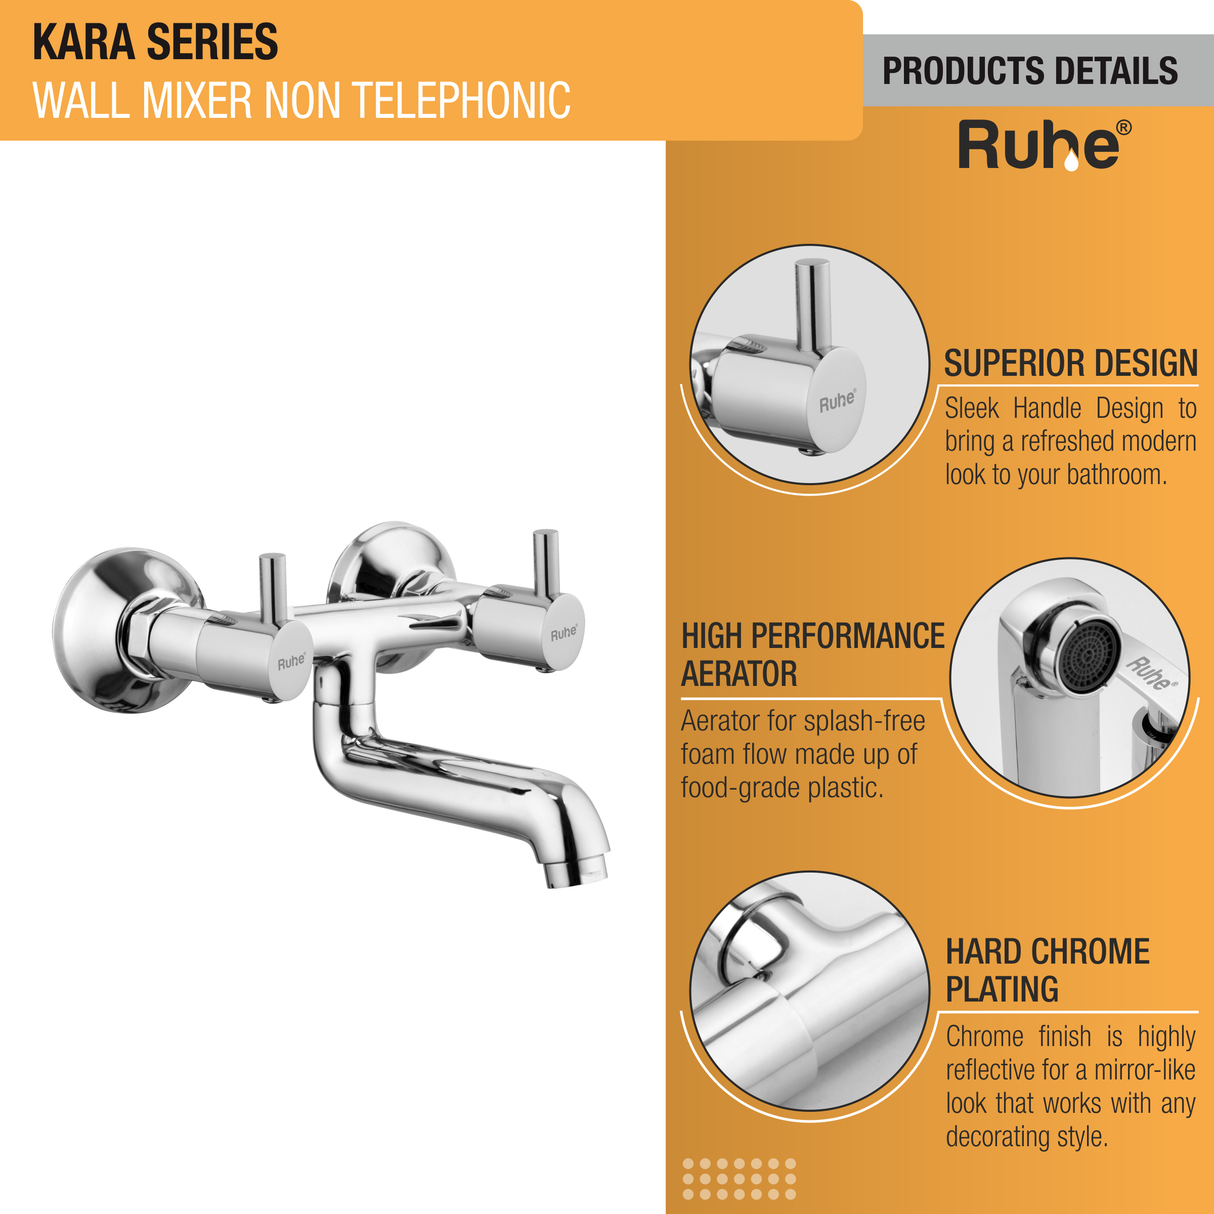 Kara Wall Mixer Non Telephonic Faucet details